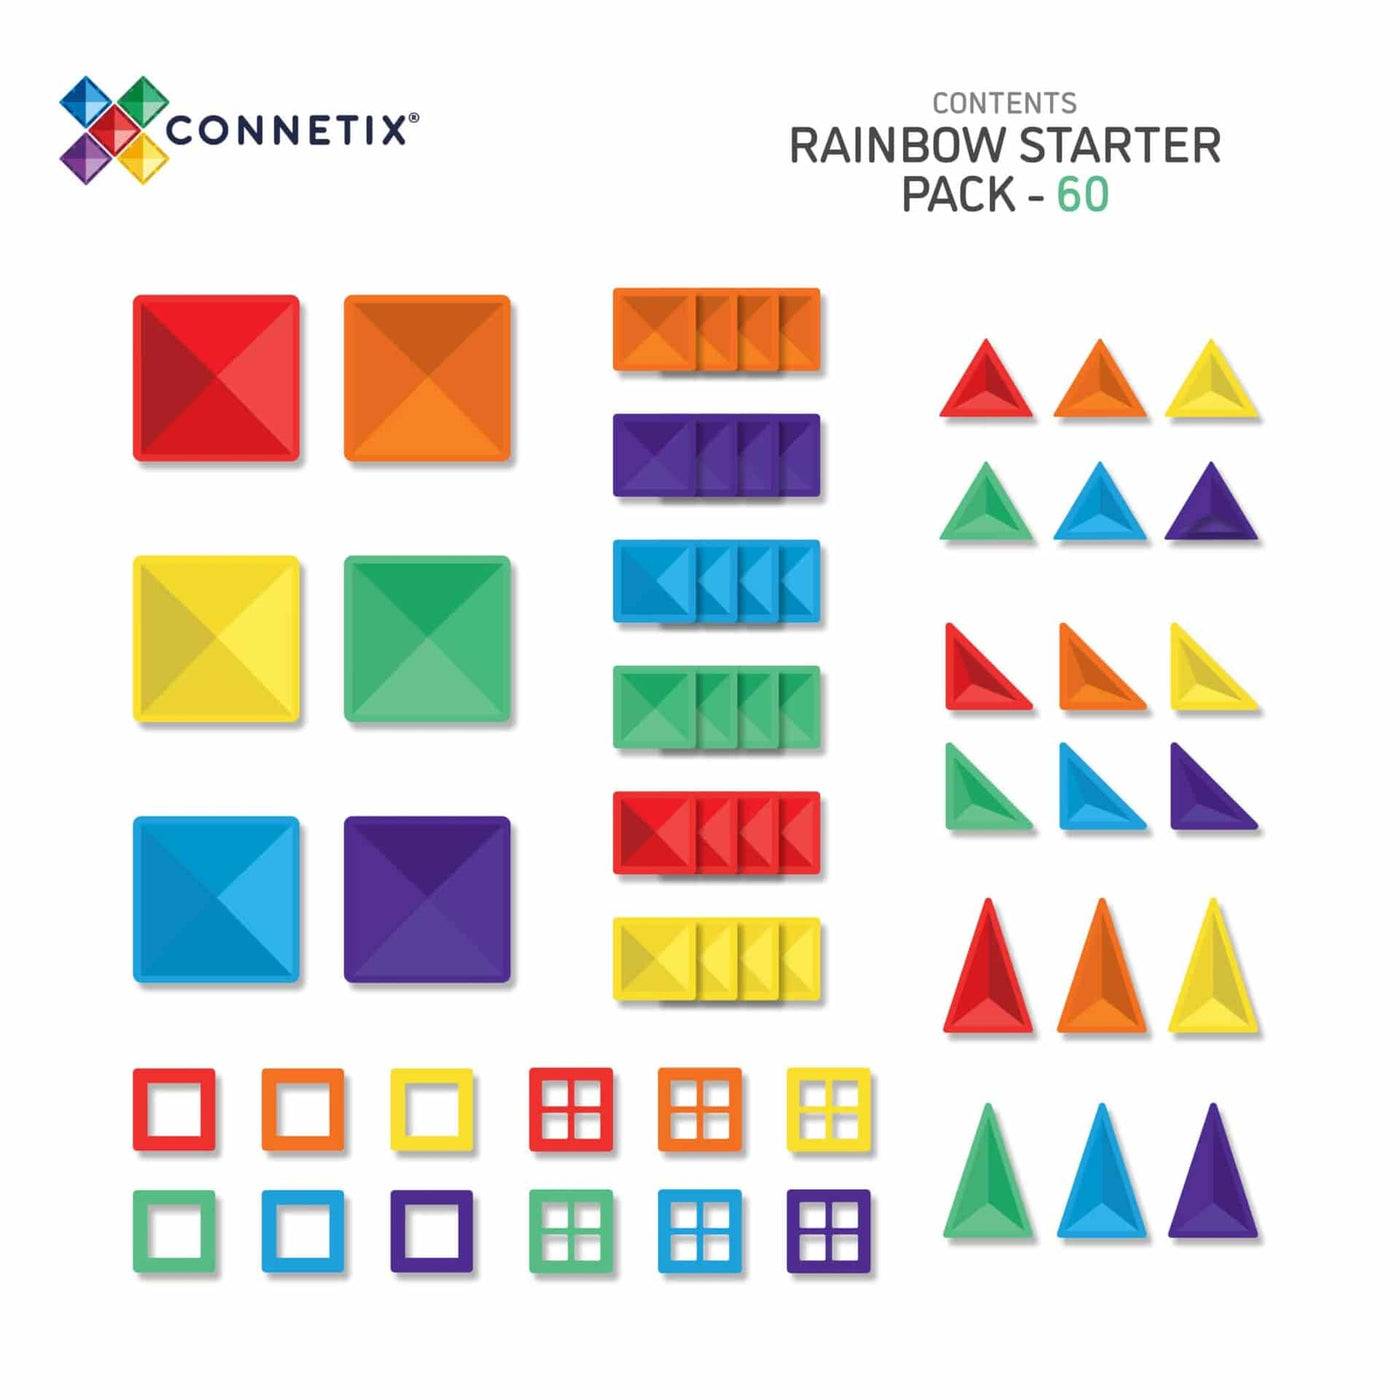 Connetix Tiles Rainbow Starter Pack 60 pc Magnetic Play Connetix 